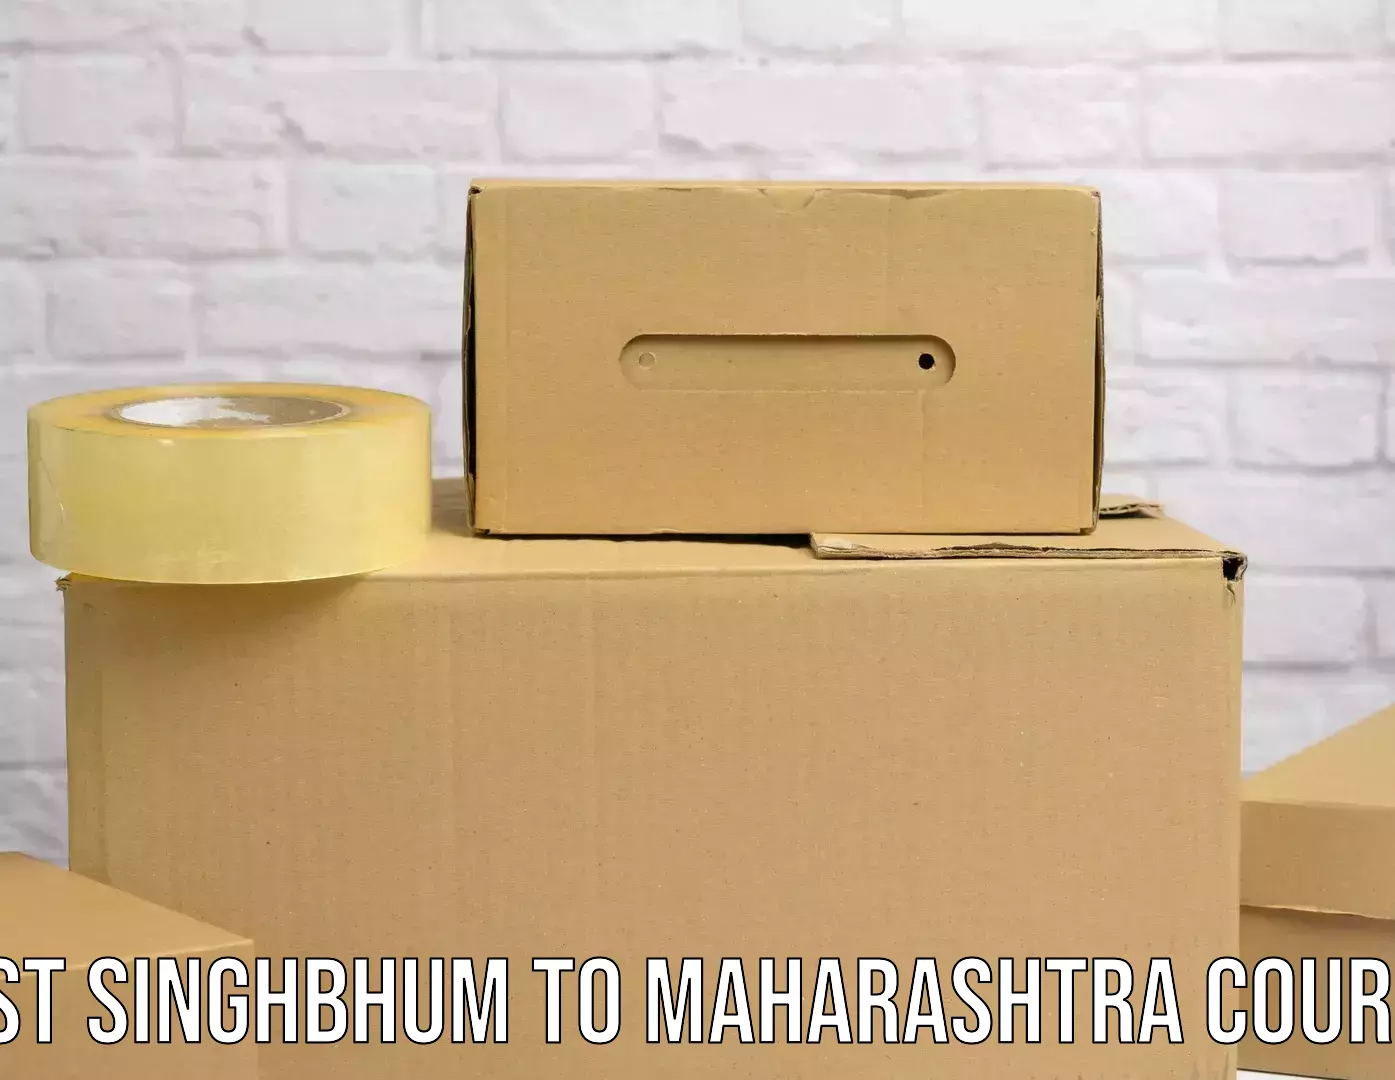 High-capacity parcel service East Singhbhum to Maharashtra